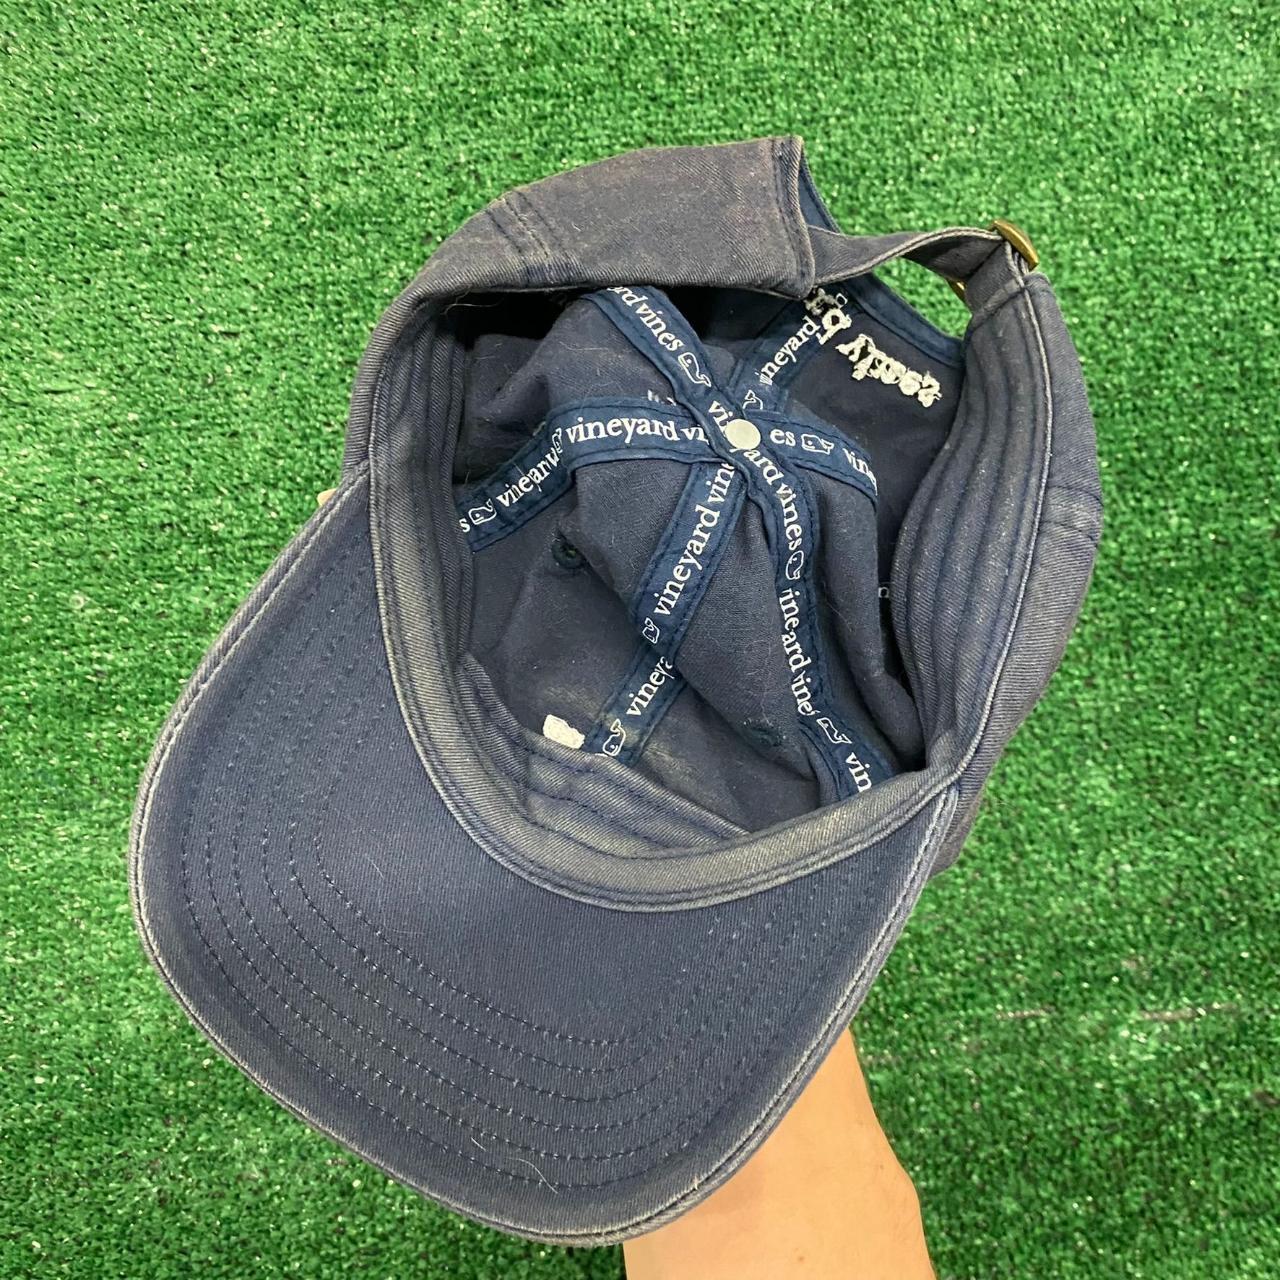 VINEYARD VINES Men's Whale Logo Baseball Hat, Vineyard Navy, One Size